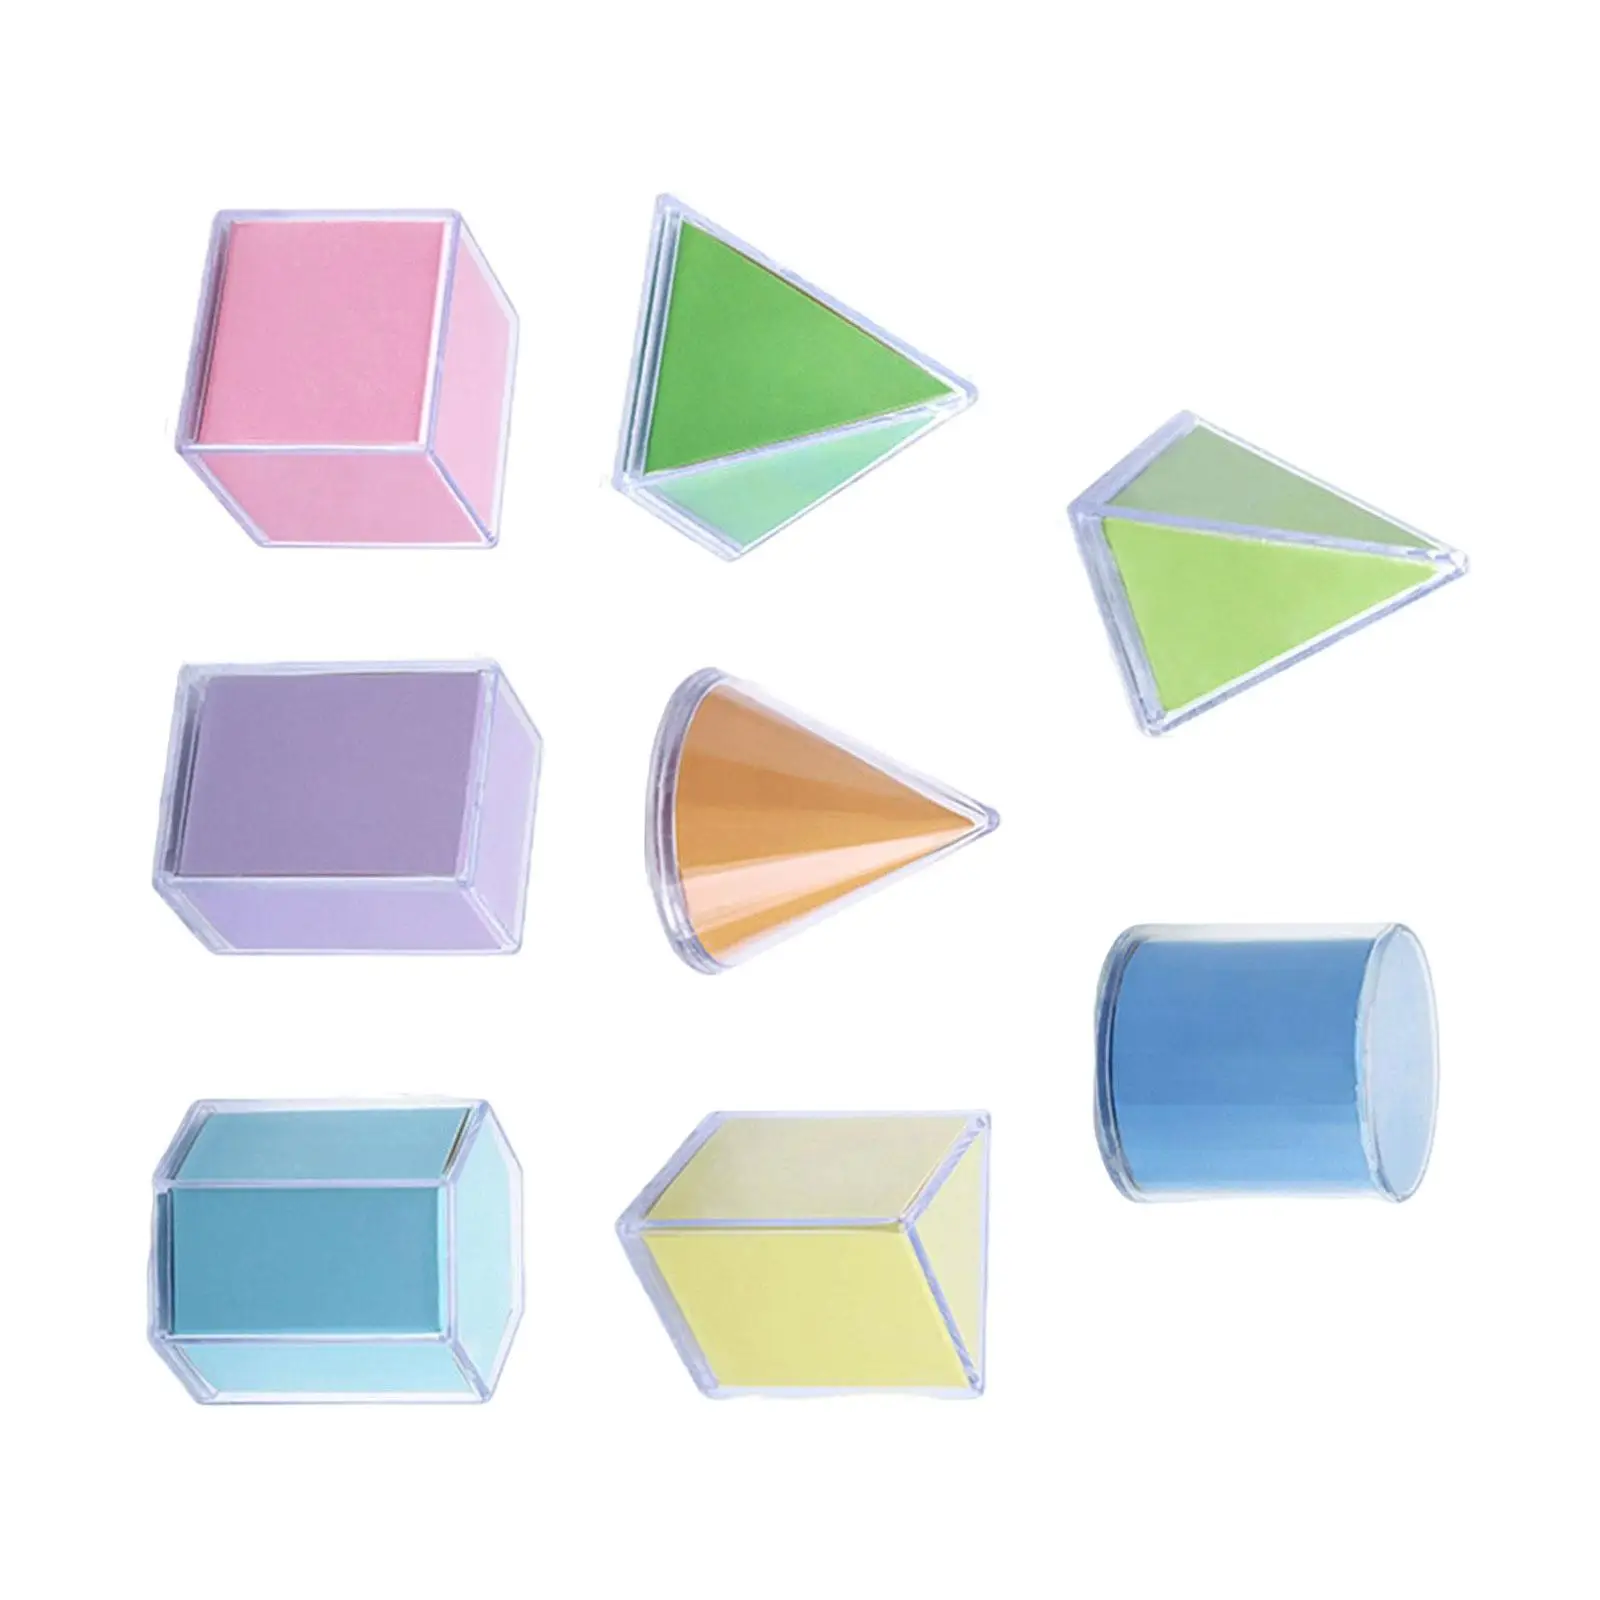 8x Transparent Geometric Shapes Blocks Montessori Toys,Shape Sorter Sorting Toy,Educational Toy Math Toys